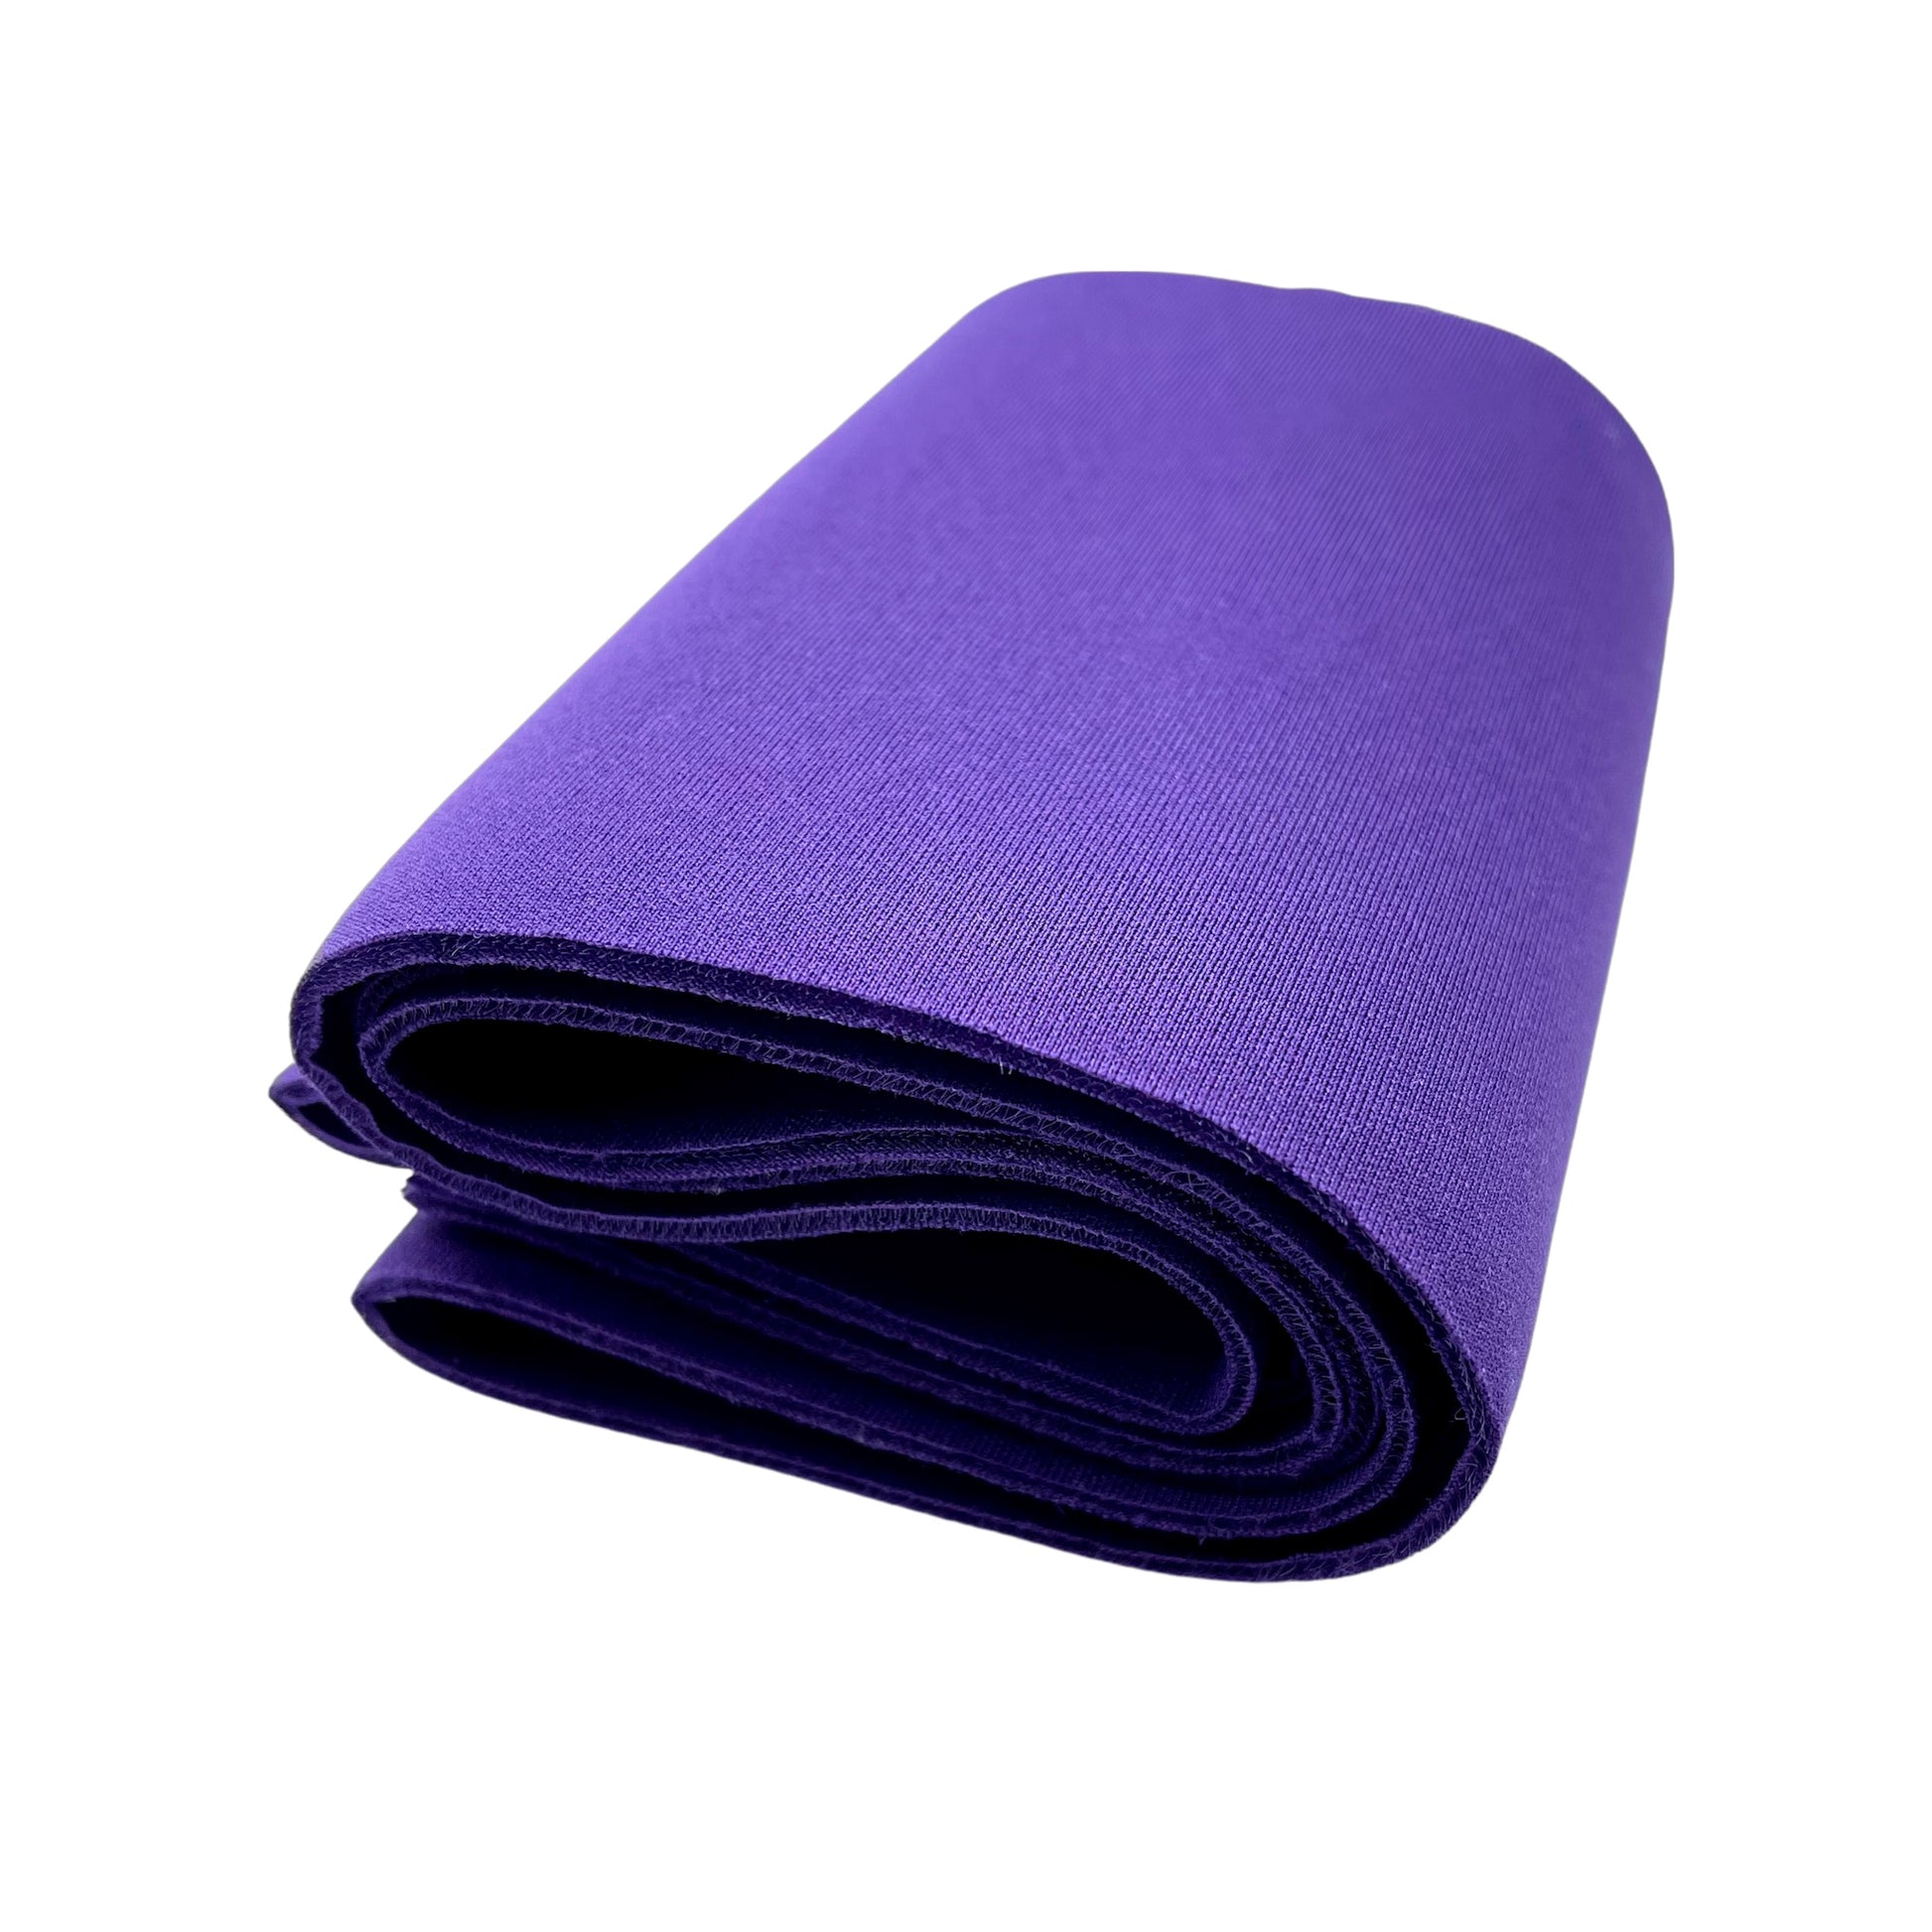 Violet purple folded padded neoprene fabric strip.